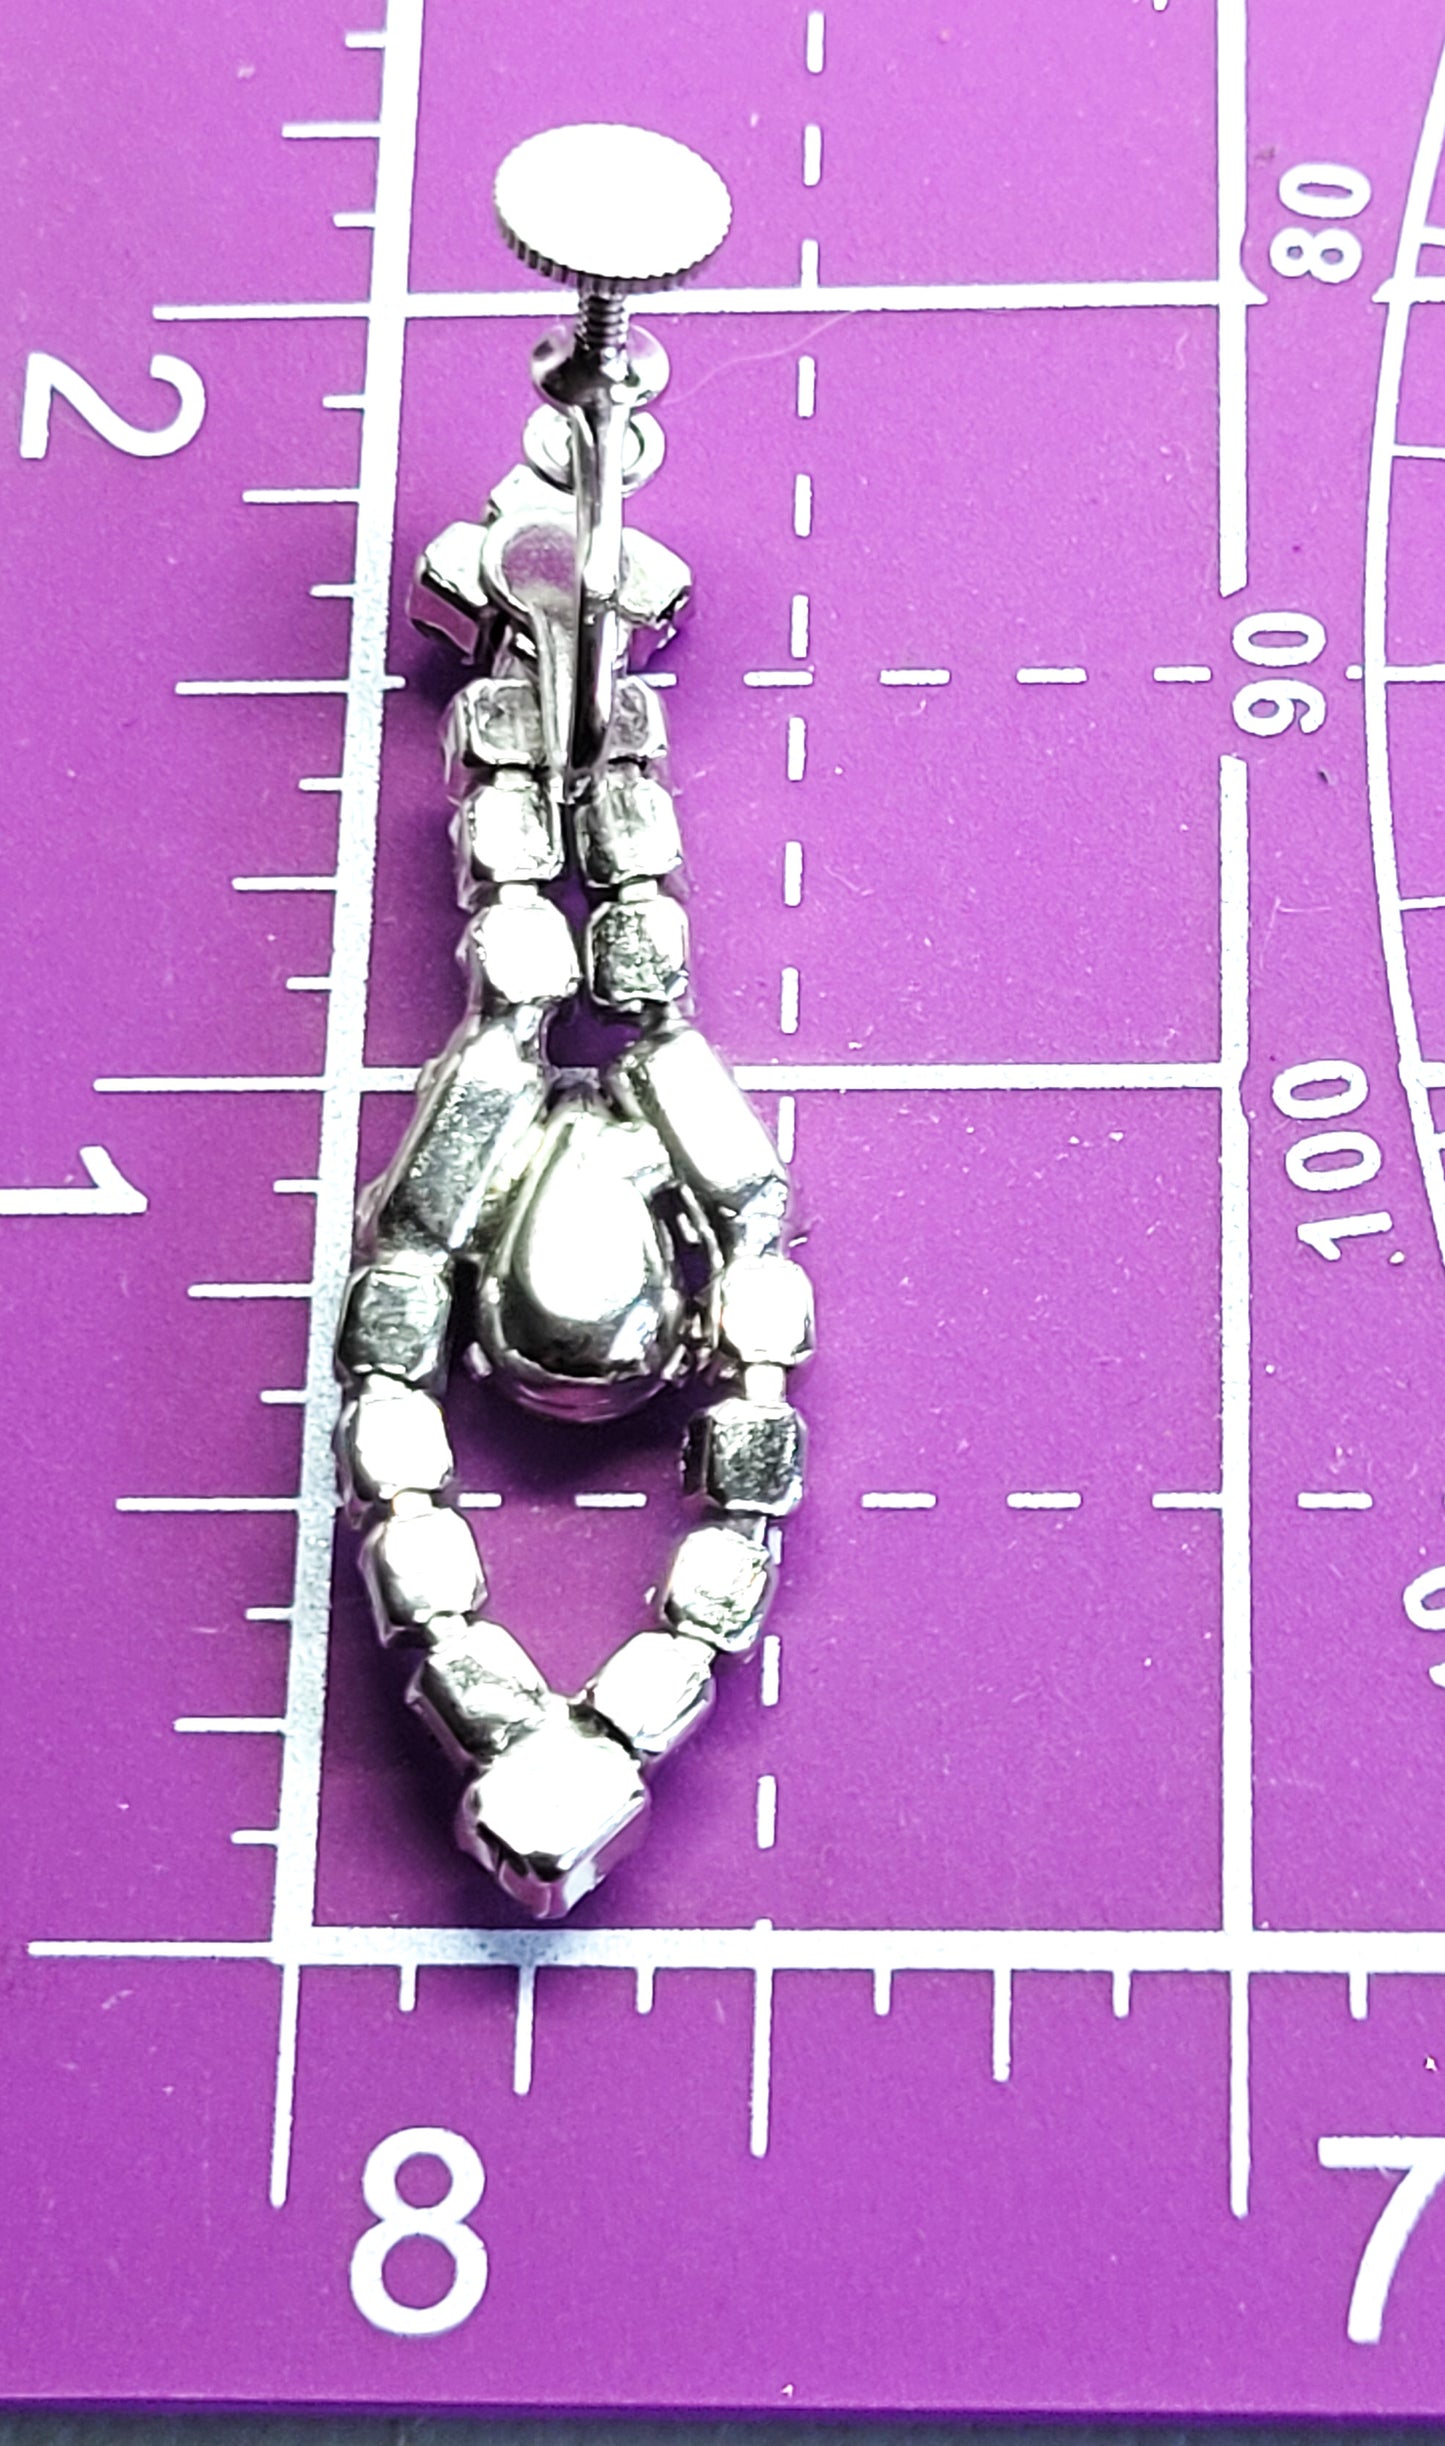 Palm Fifth Avenue NIB rhodium plated rhinestone demi set necklace earrings